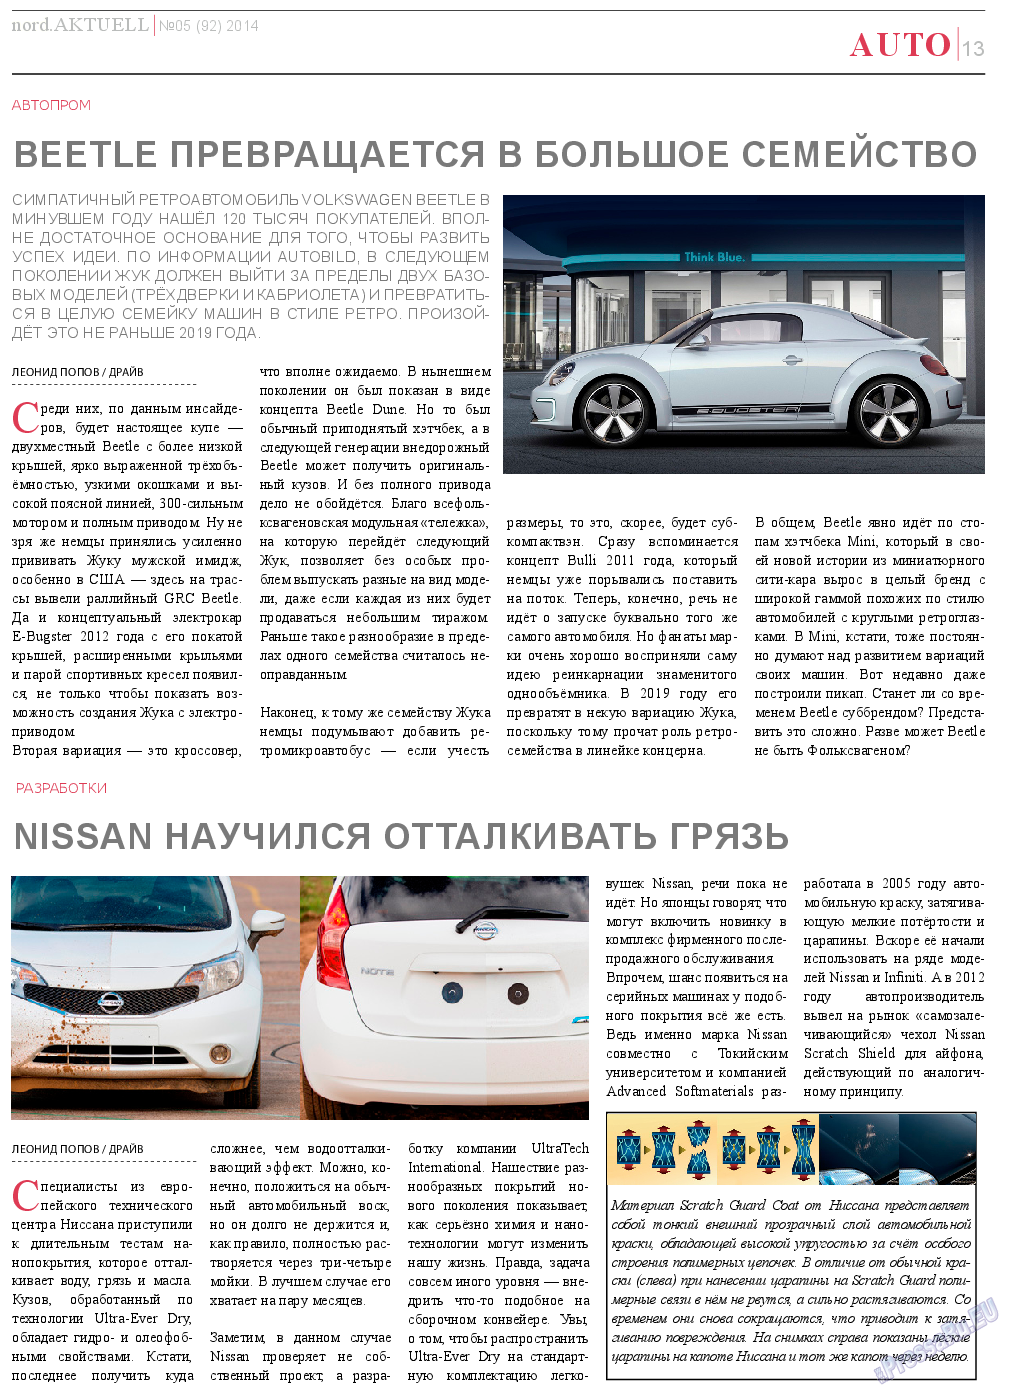 nord.Aktuell, газета. 2014 №5 стр.13